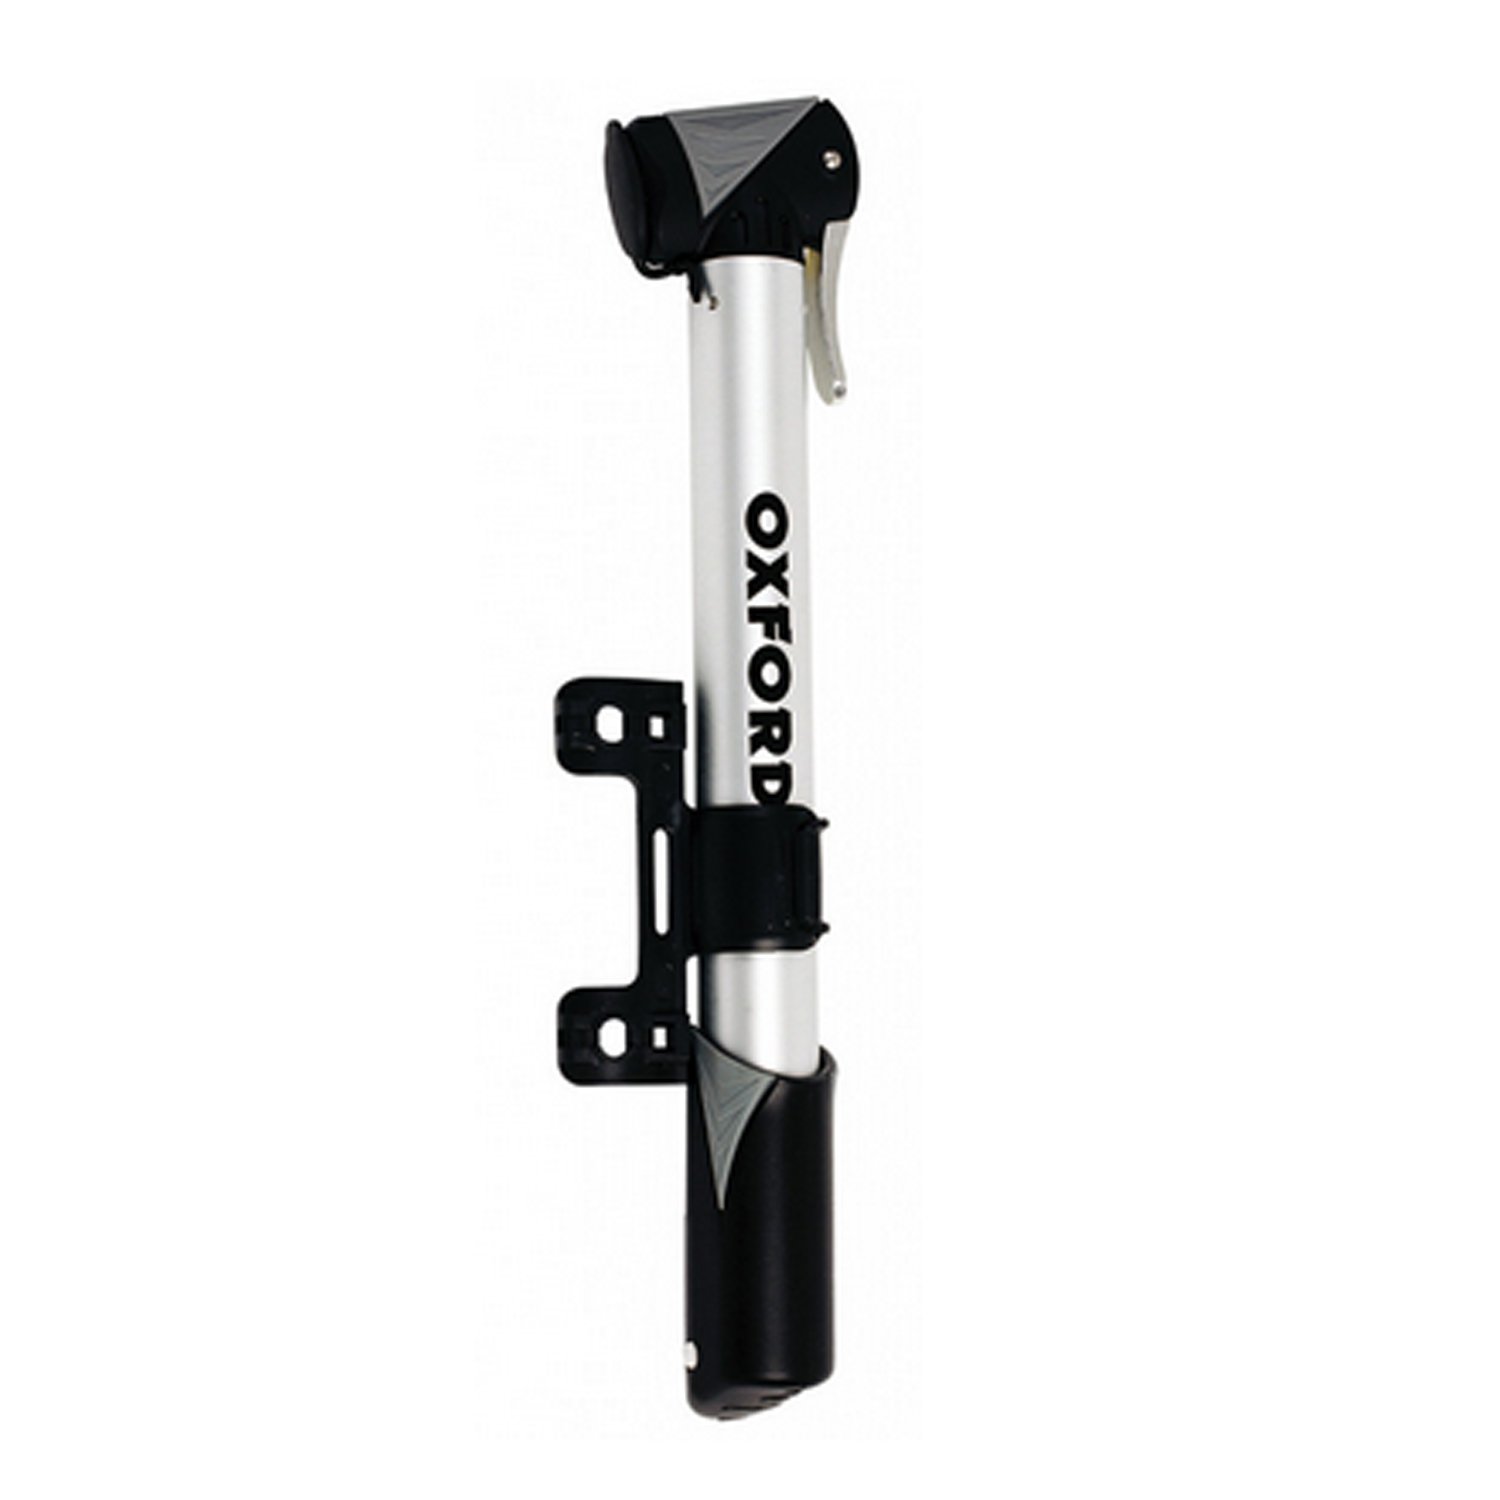 Велонасос Oxford Airflow Strike Alloy Mini Pump, серебристый, PU883 велонасос beto mini алюминиевый 7 bar 470360